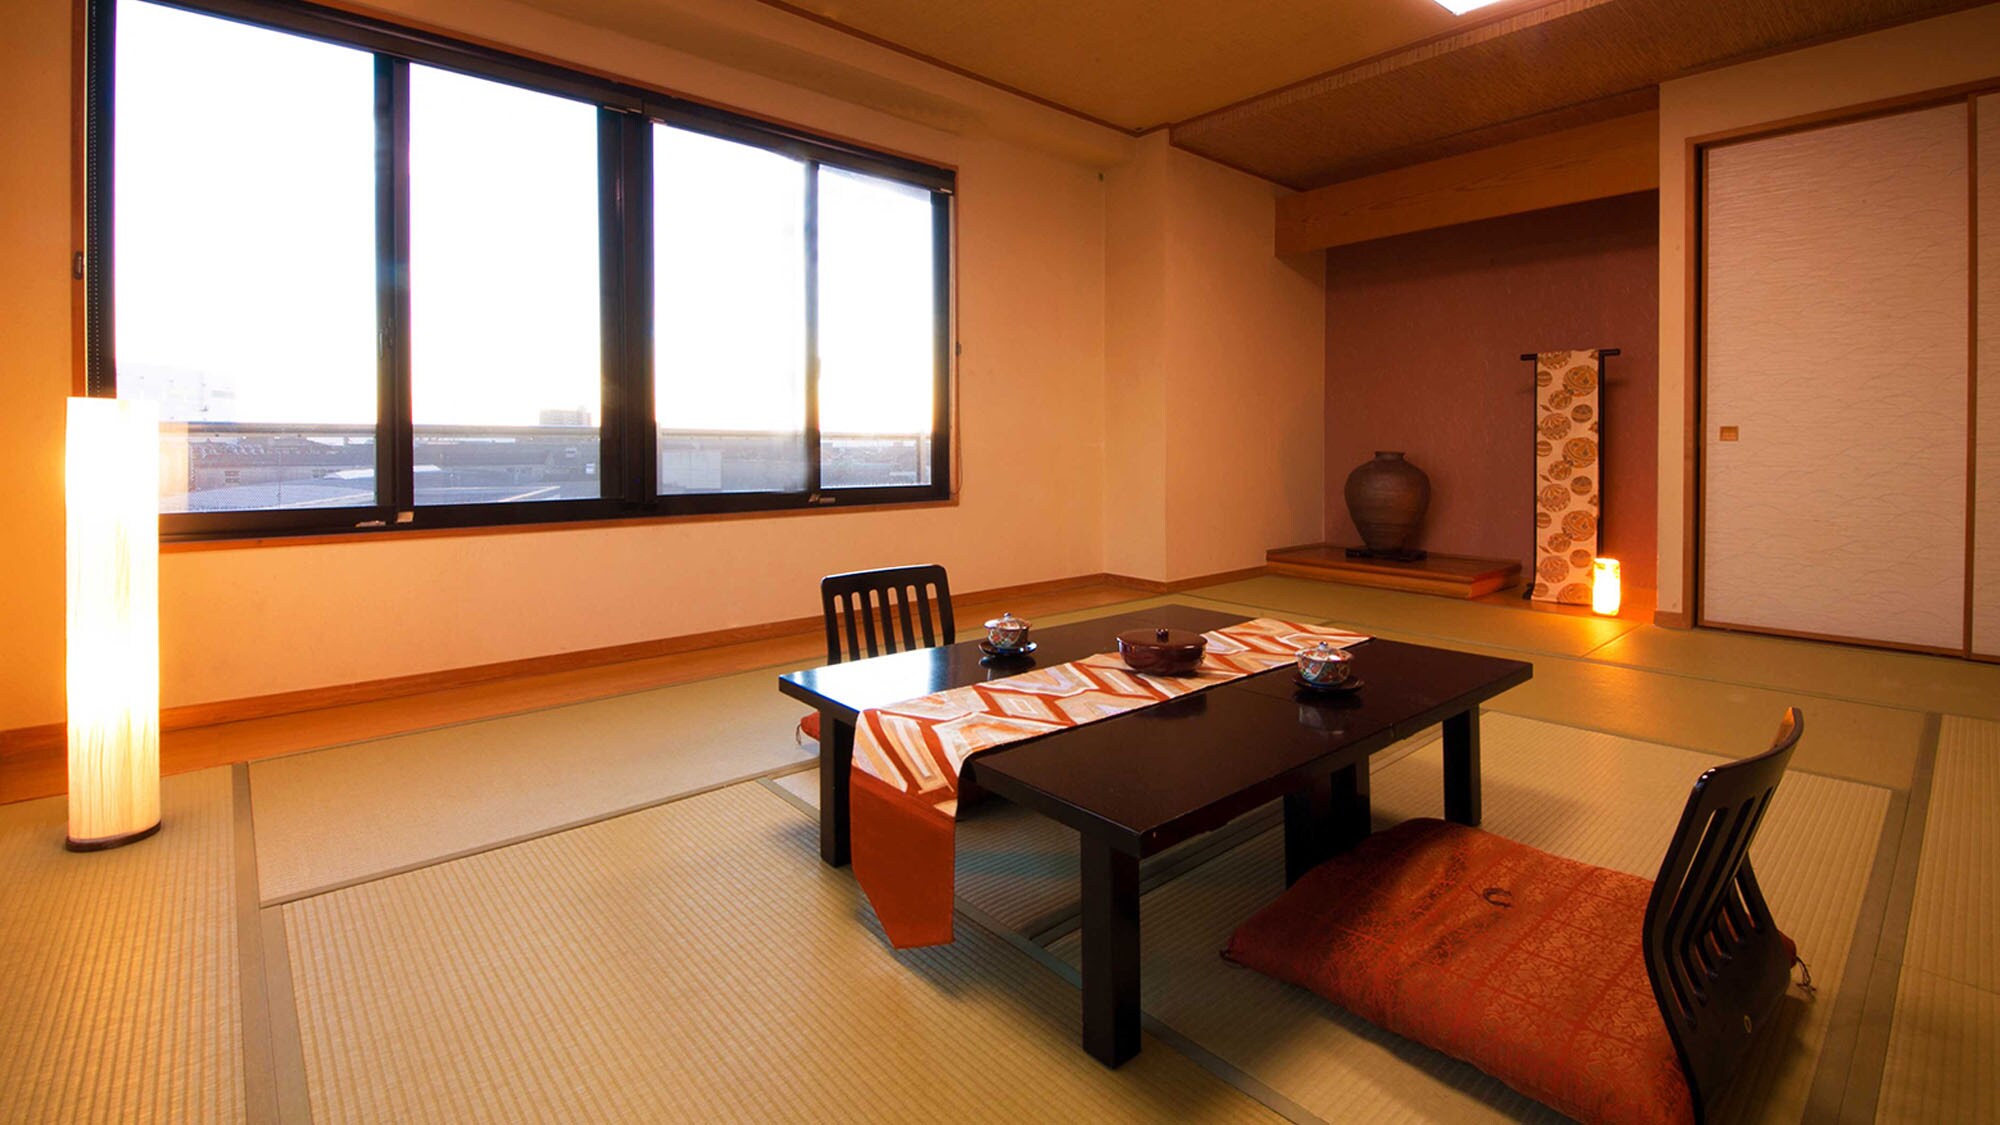 ■ Japanese-style room 12 tatami mats ■